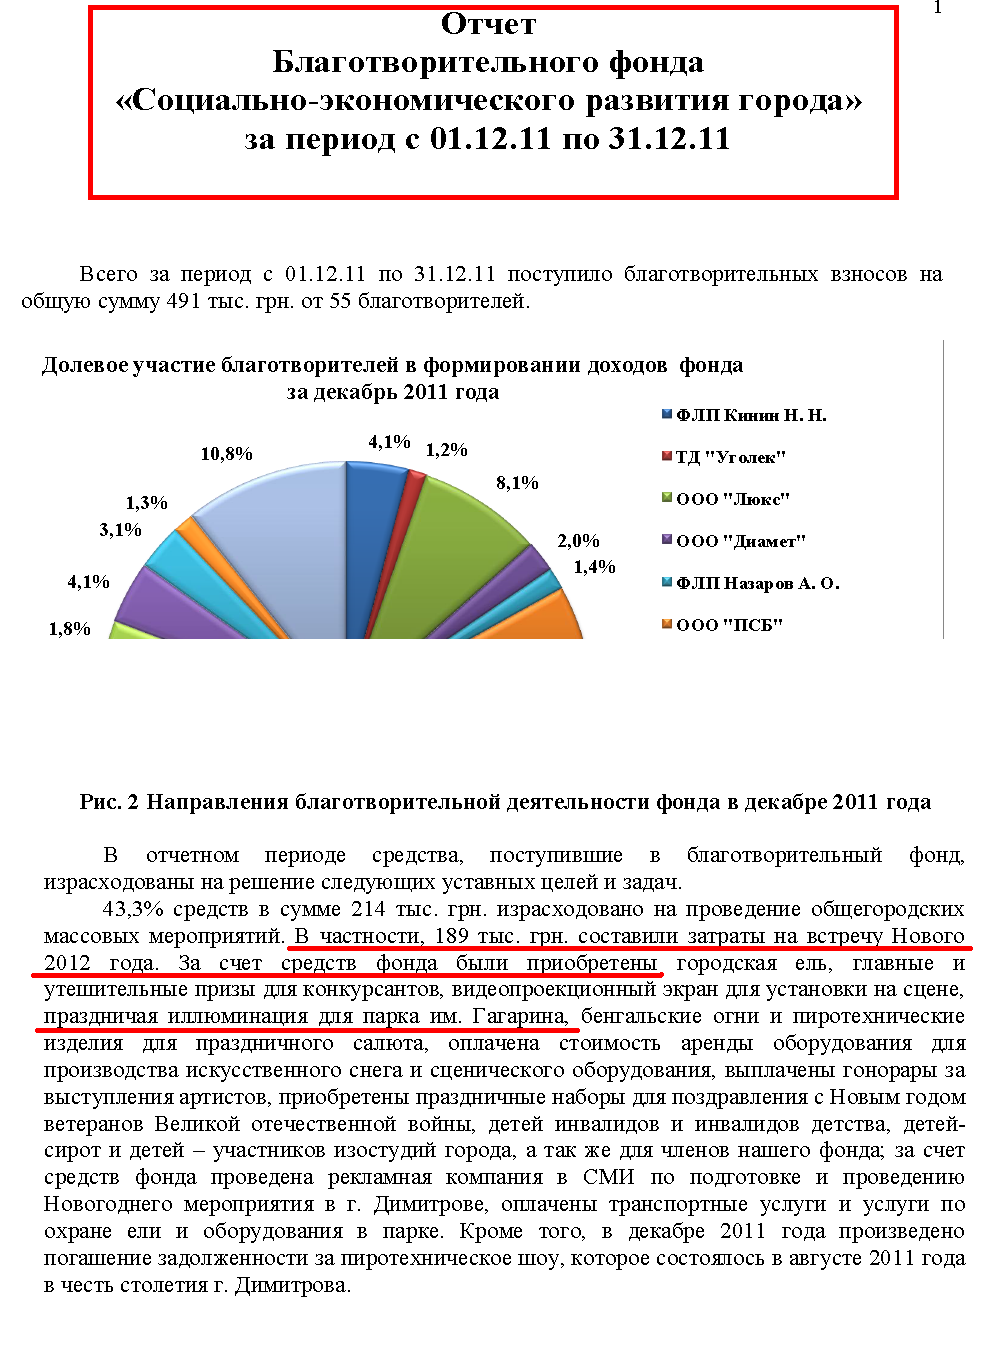 http://dimitrov-fond.org.ua/wp-content/uploads/2012/04/zvit-december-2011.pdf